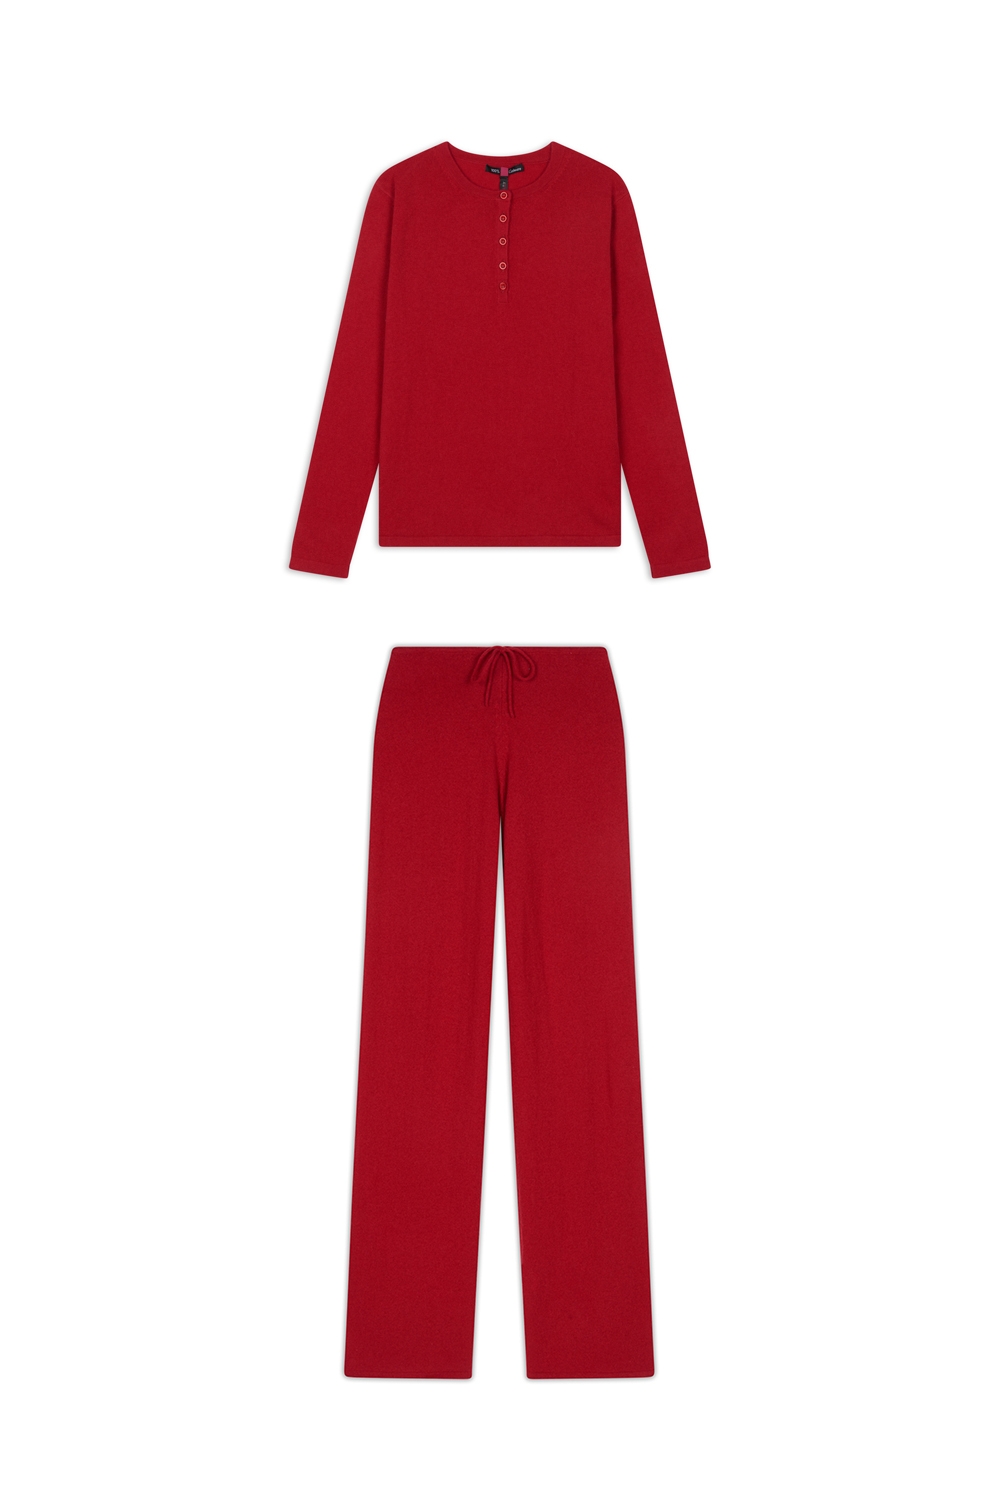 Cachemire pyjama femme loan rouge velours xl